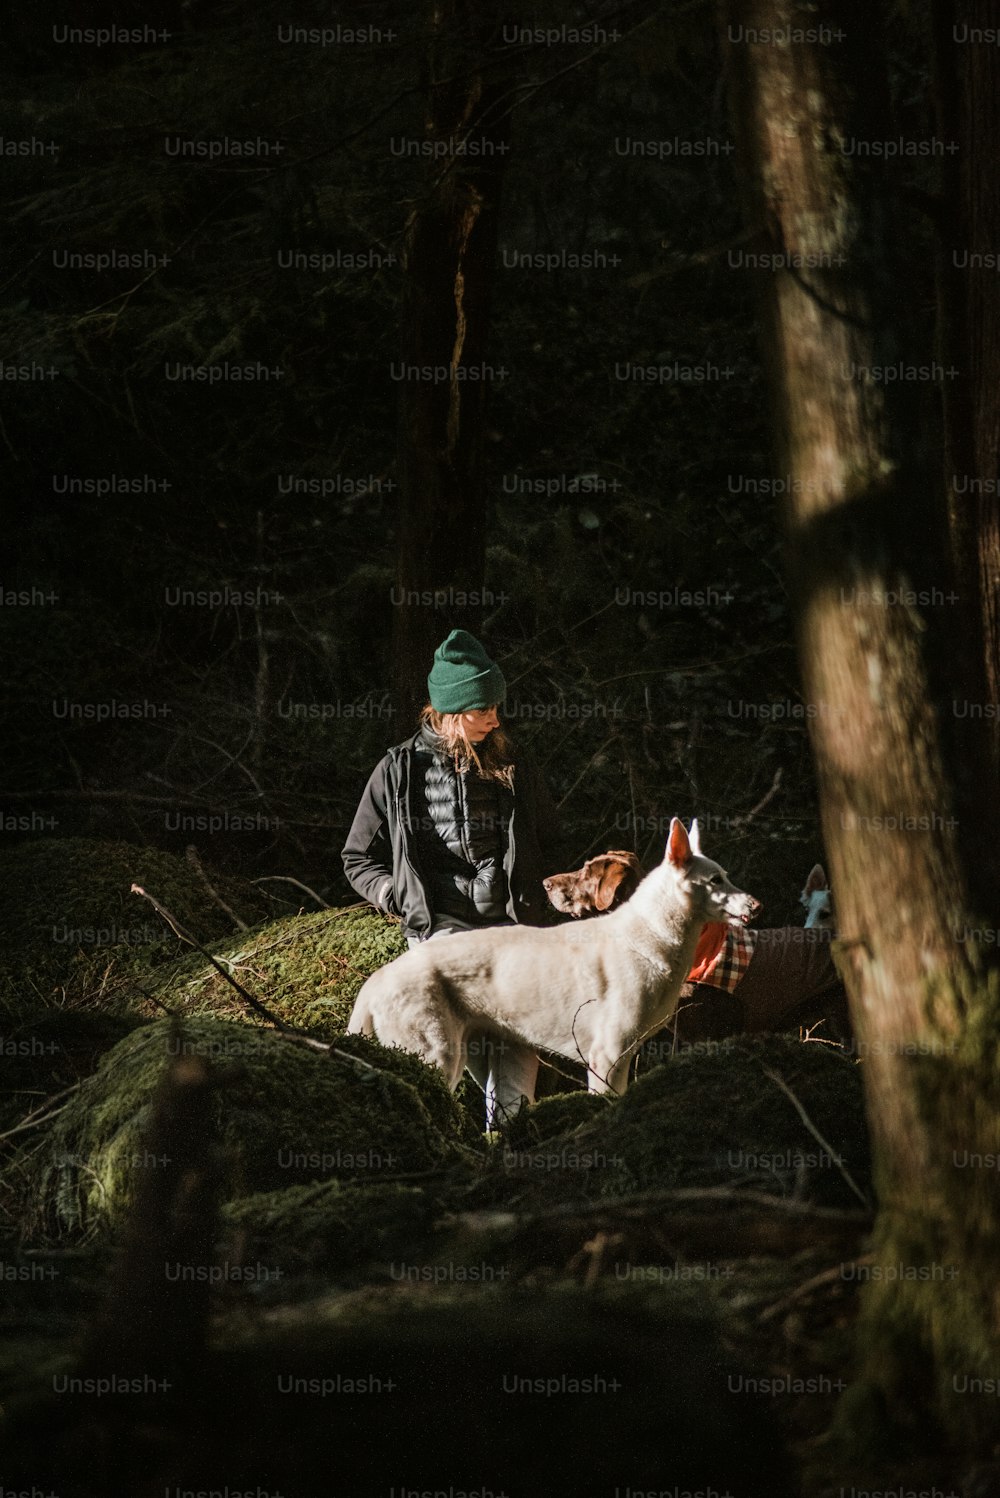 a man kneeling down next to a white sheep